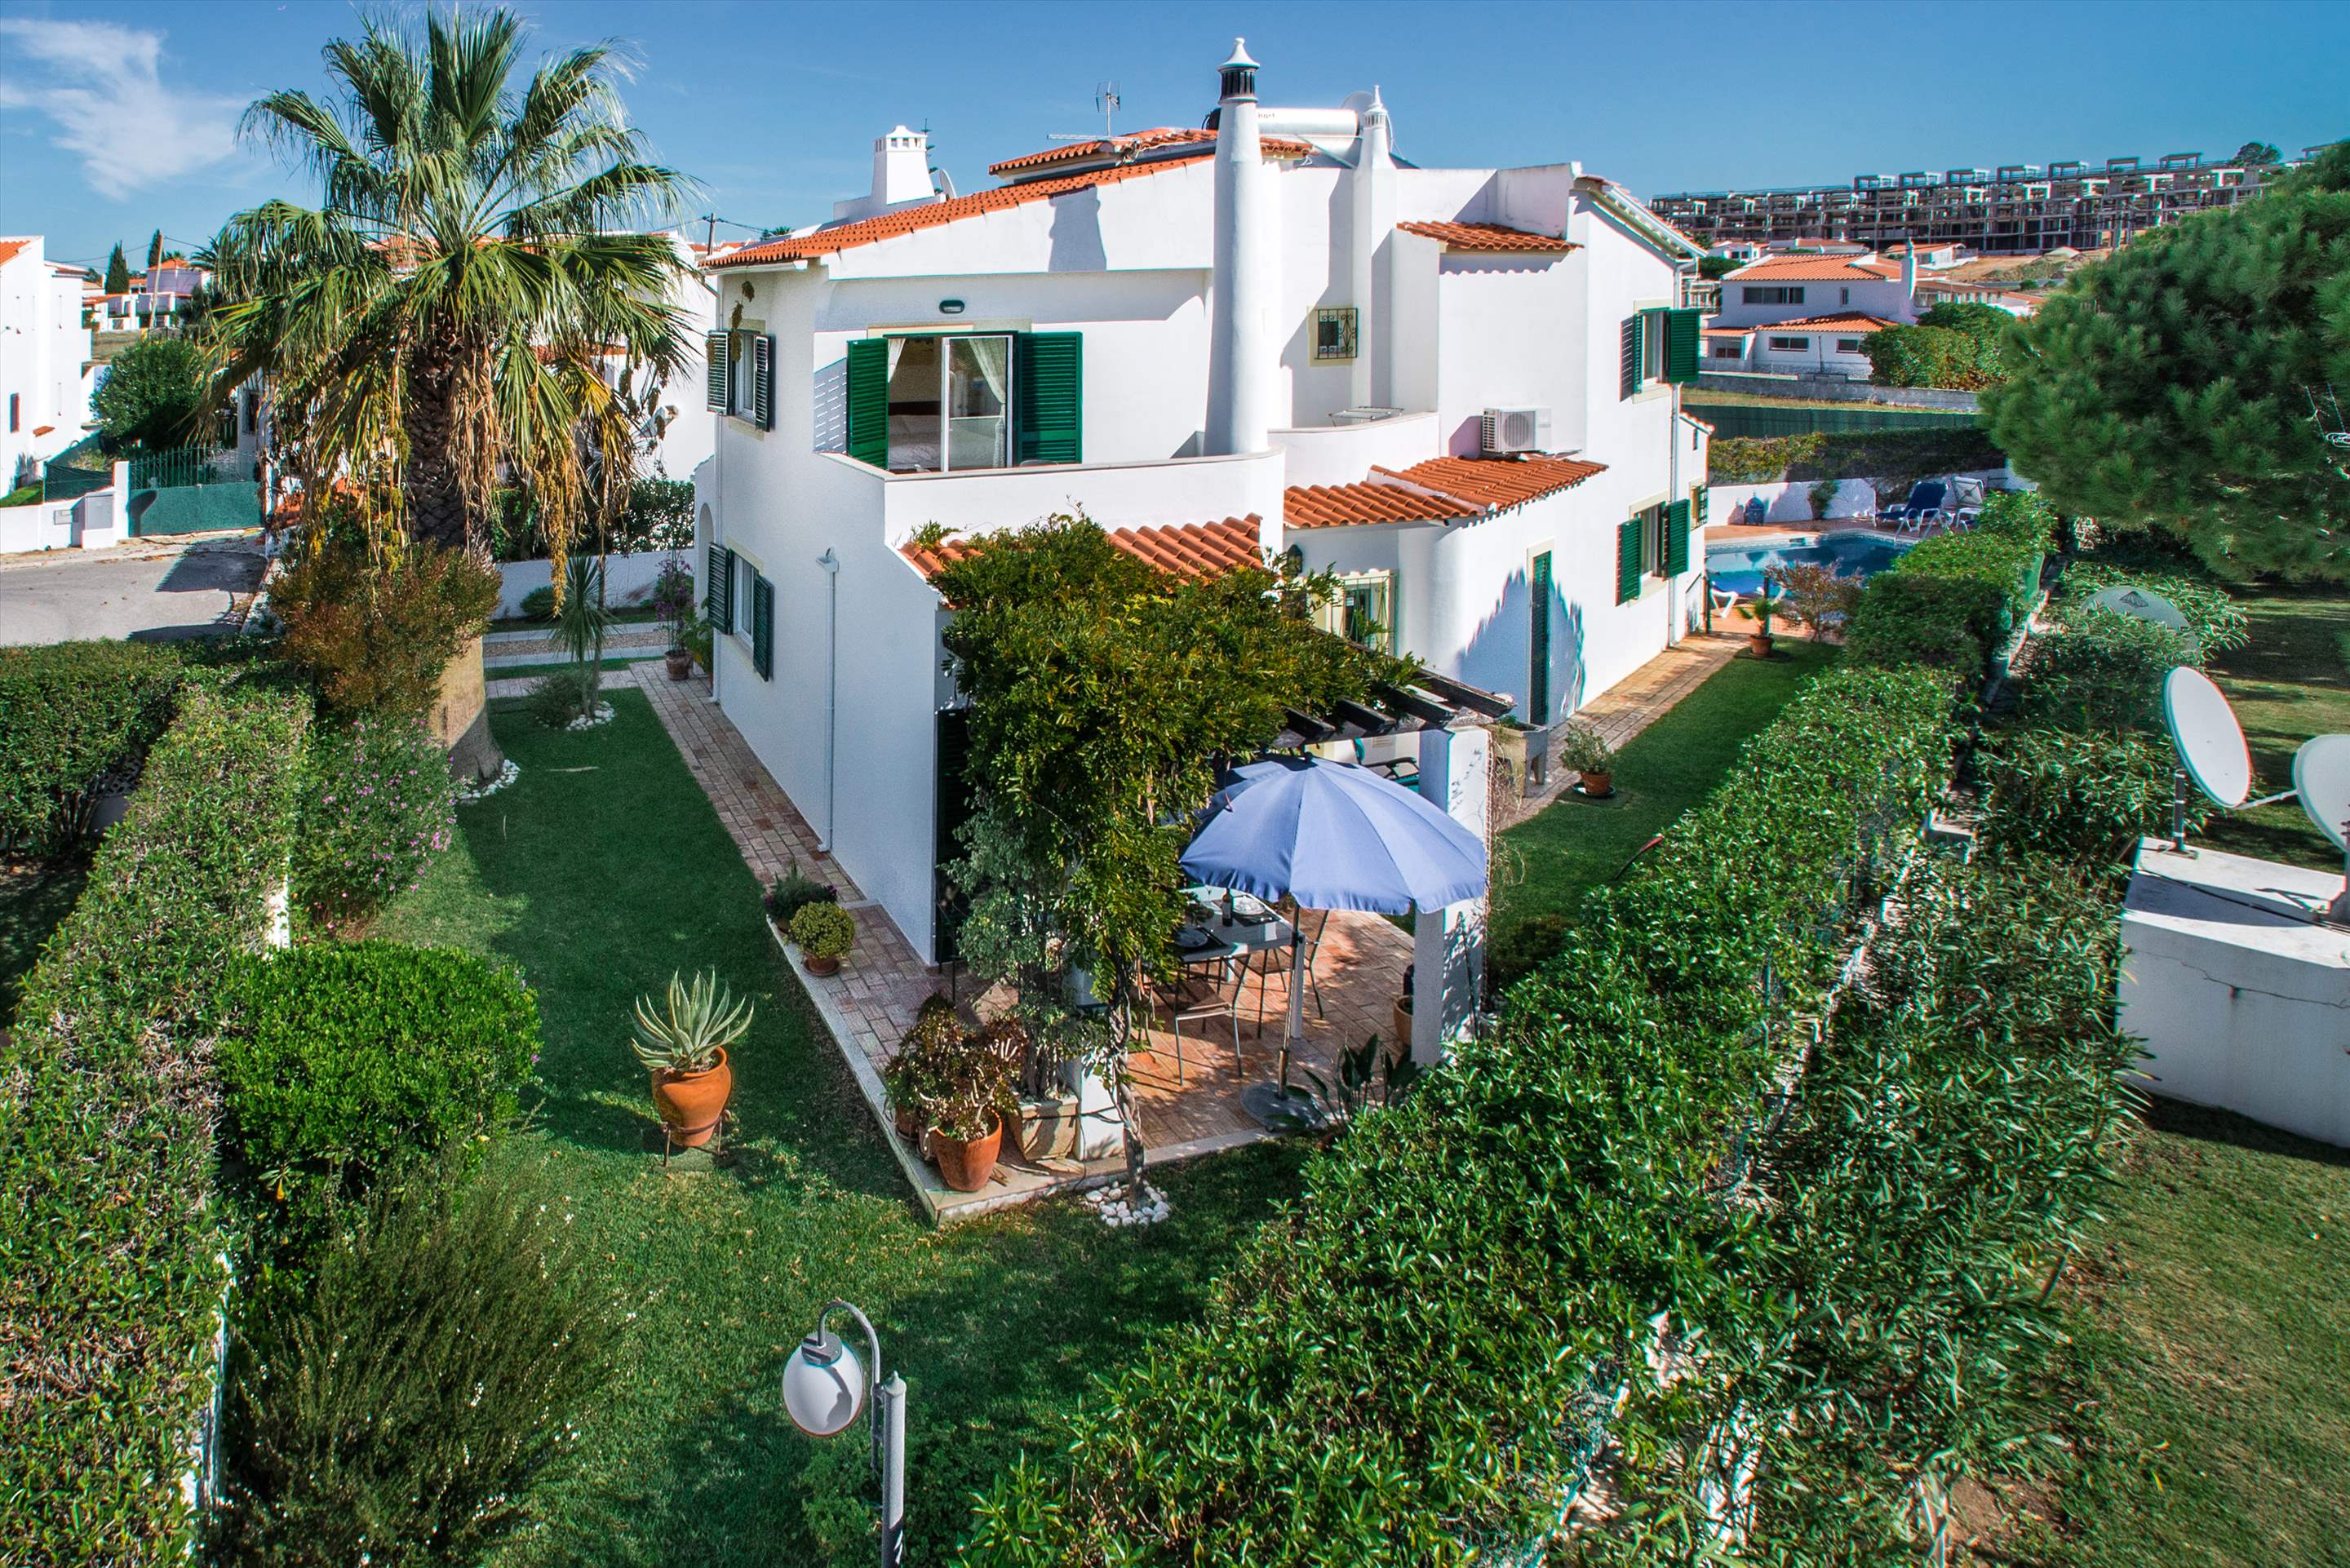 Julieta do Mar, 3 bedroom villa in Gale, Vale da Parra and Guia, Algarve Photo #28